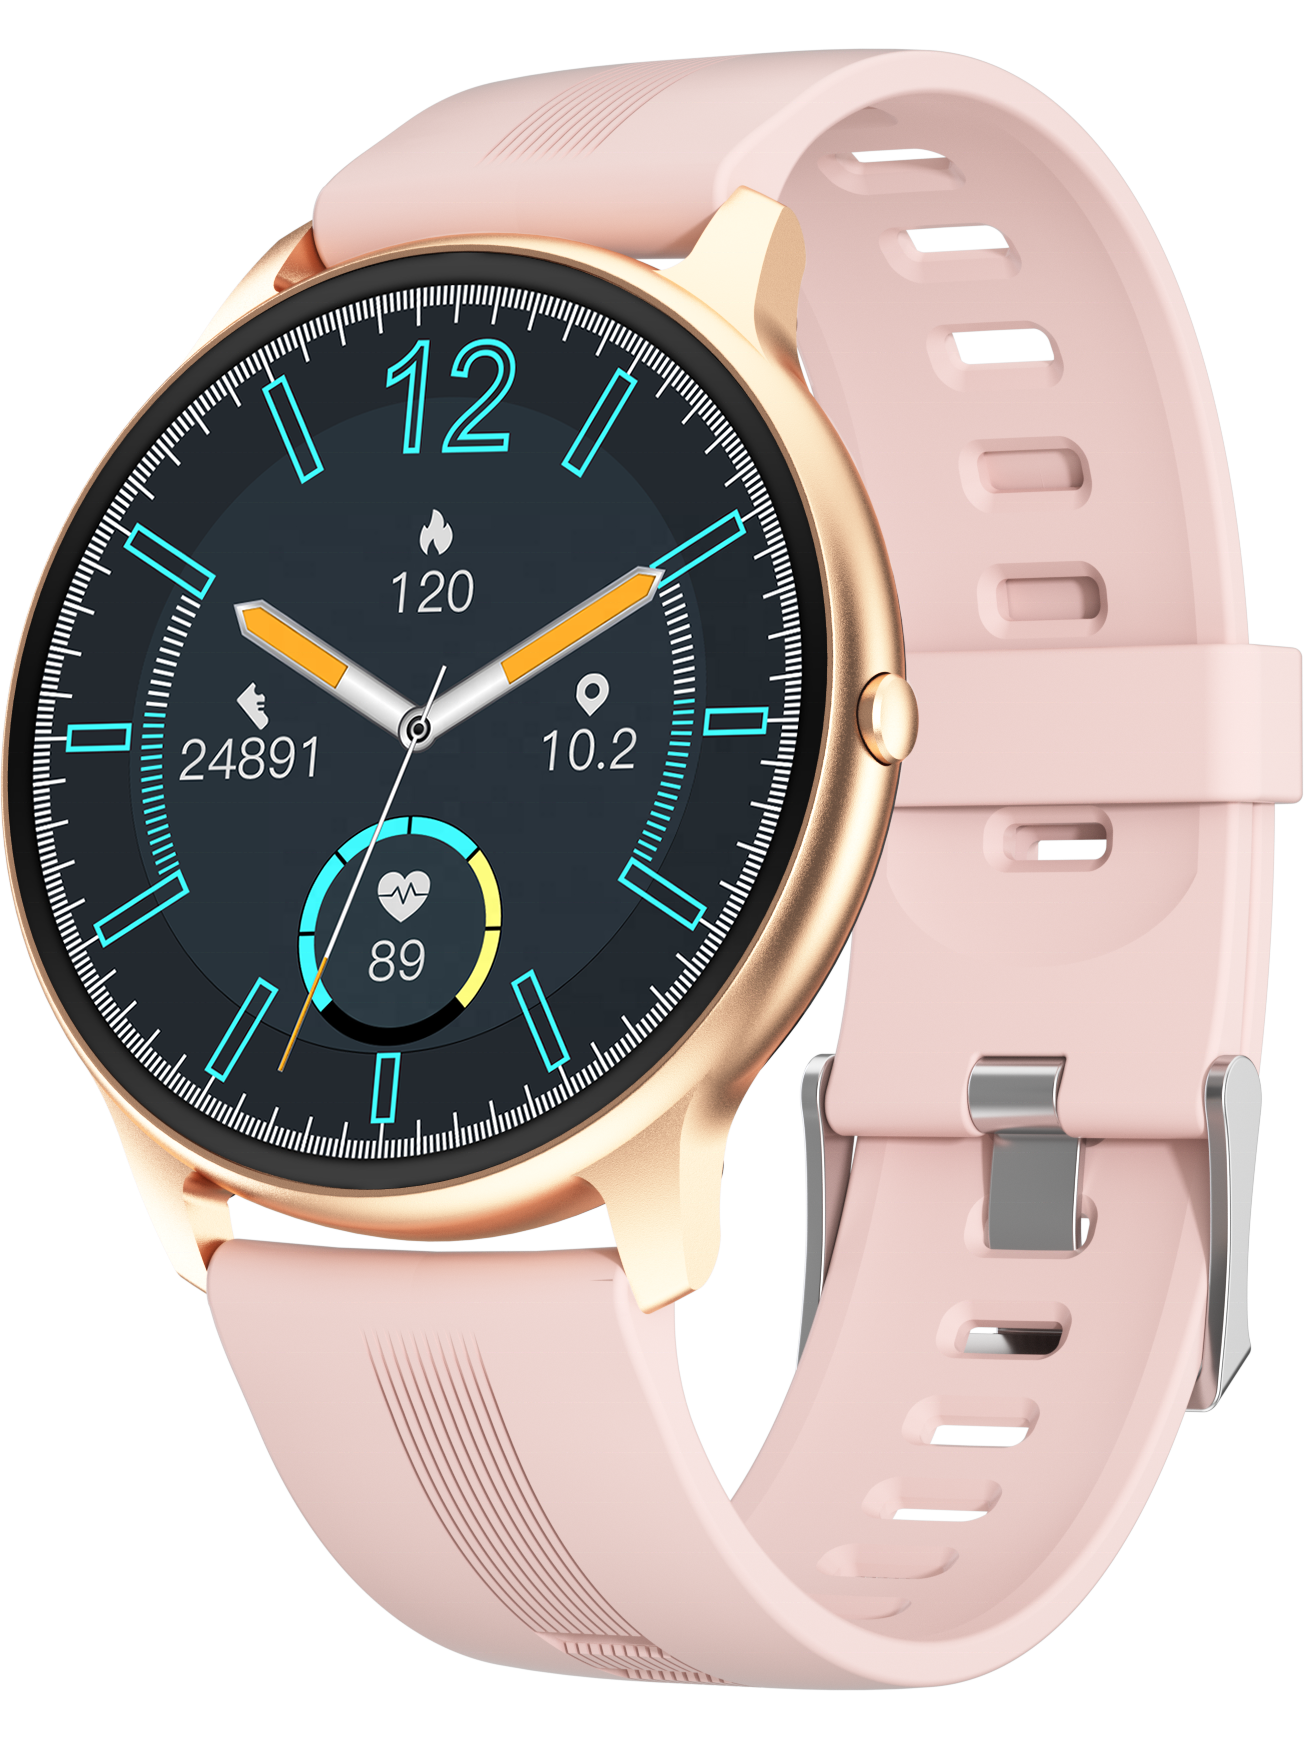 Cмарт-часы Smart Watch LW11